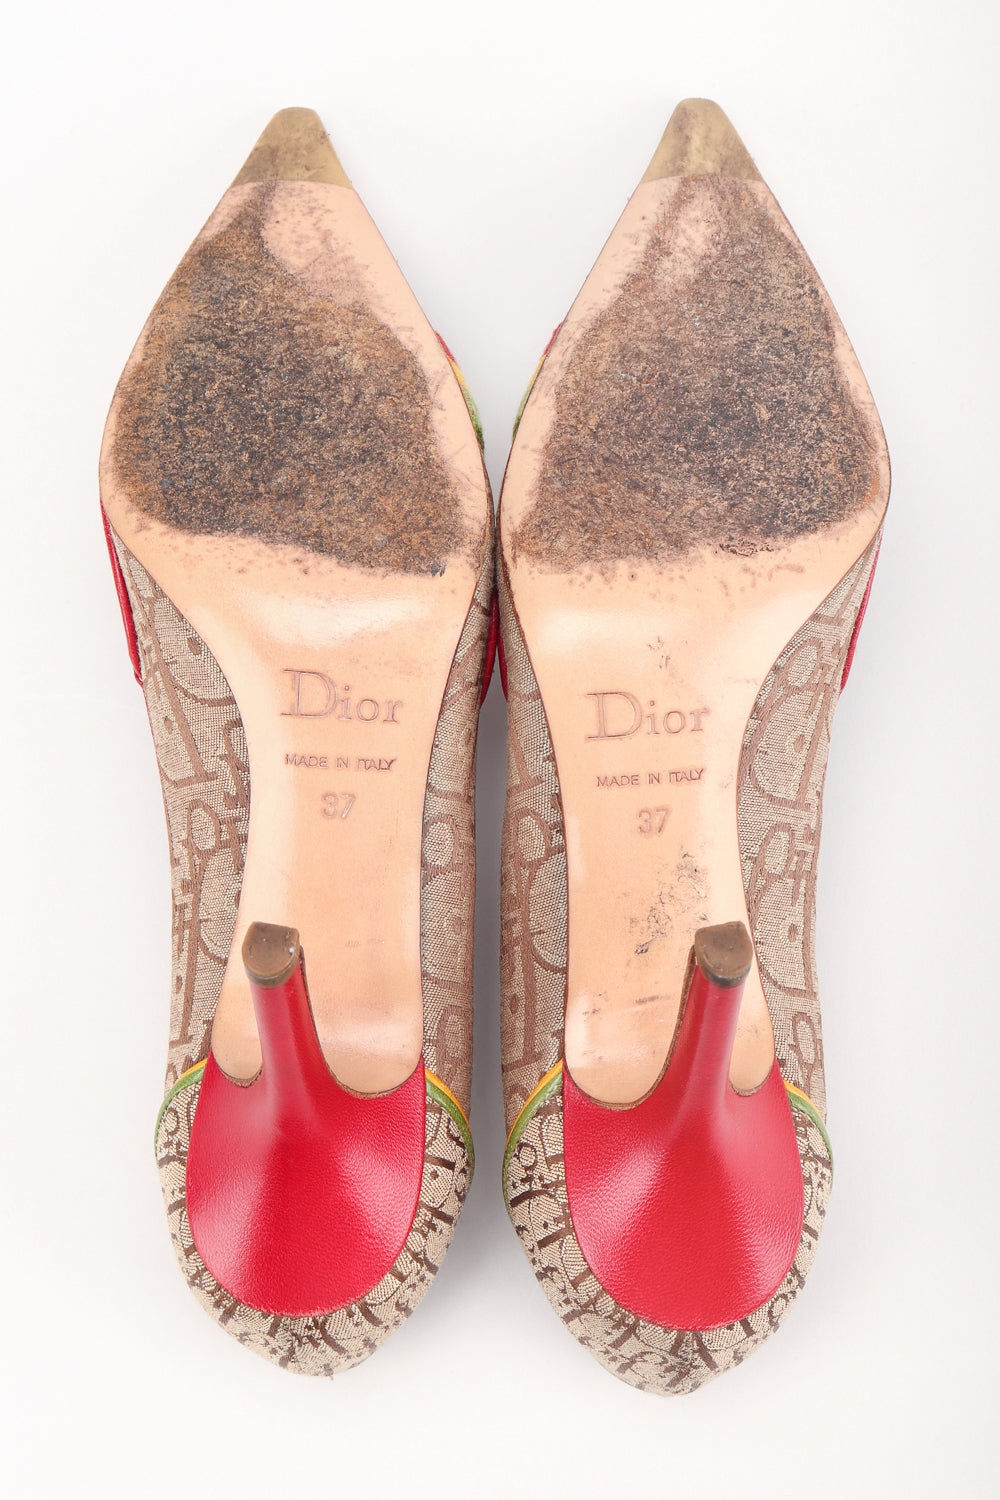 Recess Los Angeles Designer Consignment Resale Recycled Vintage Christian Dior John Galliano 2004 Rasta Collection Monogram Heels